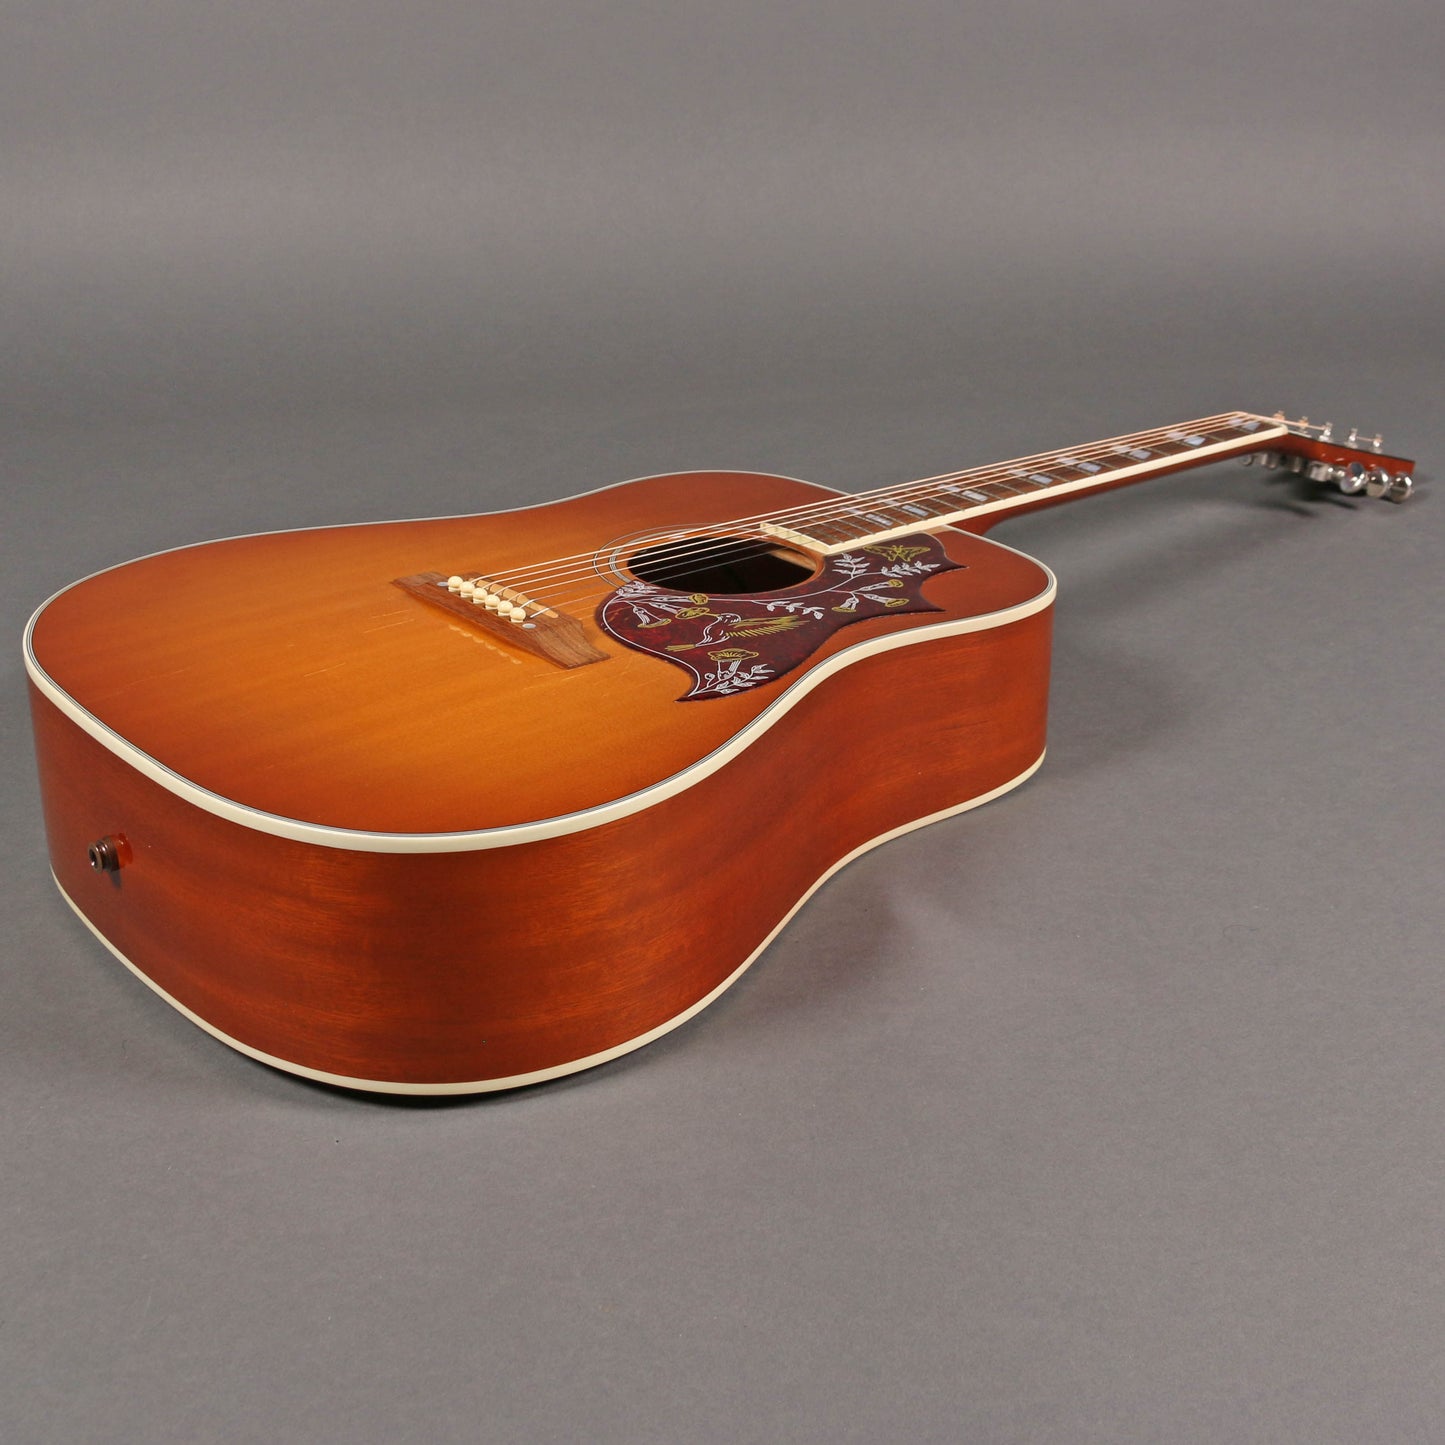 2008 Gibson Hummingbird